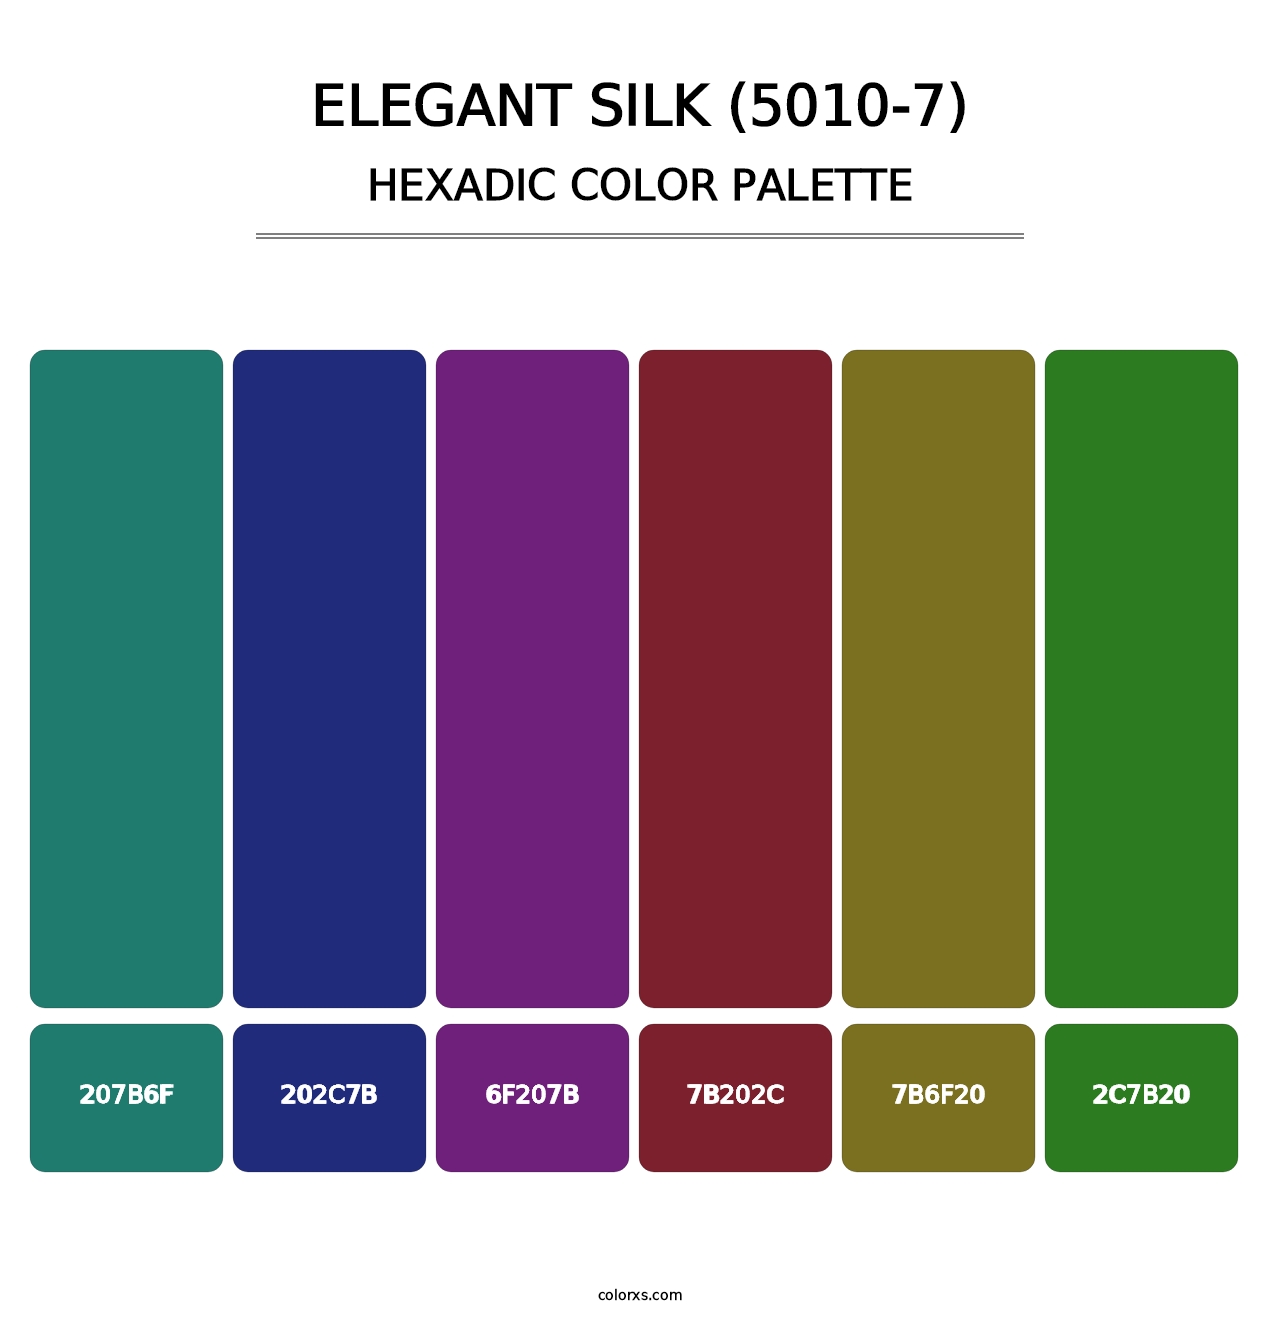 Elegant Silk (5010-7) - Hexadic Color Palette